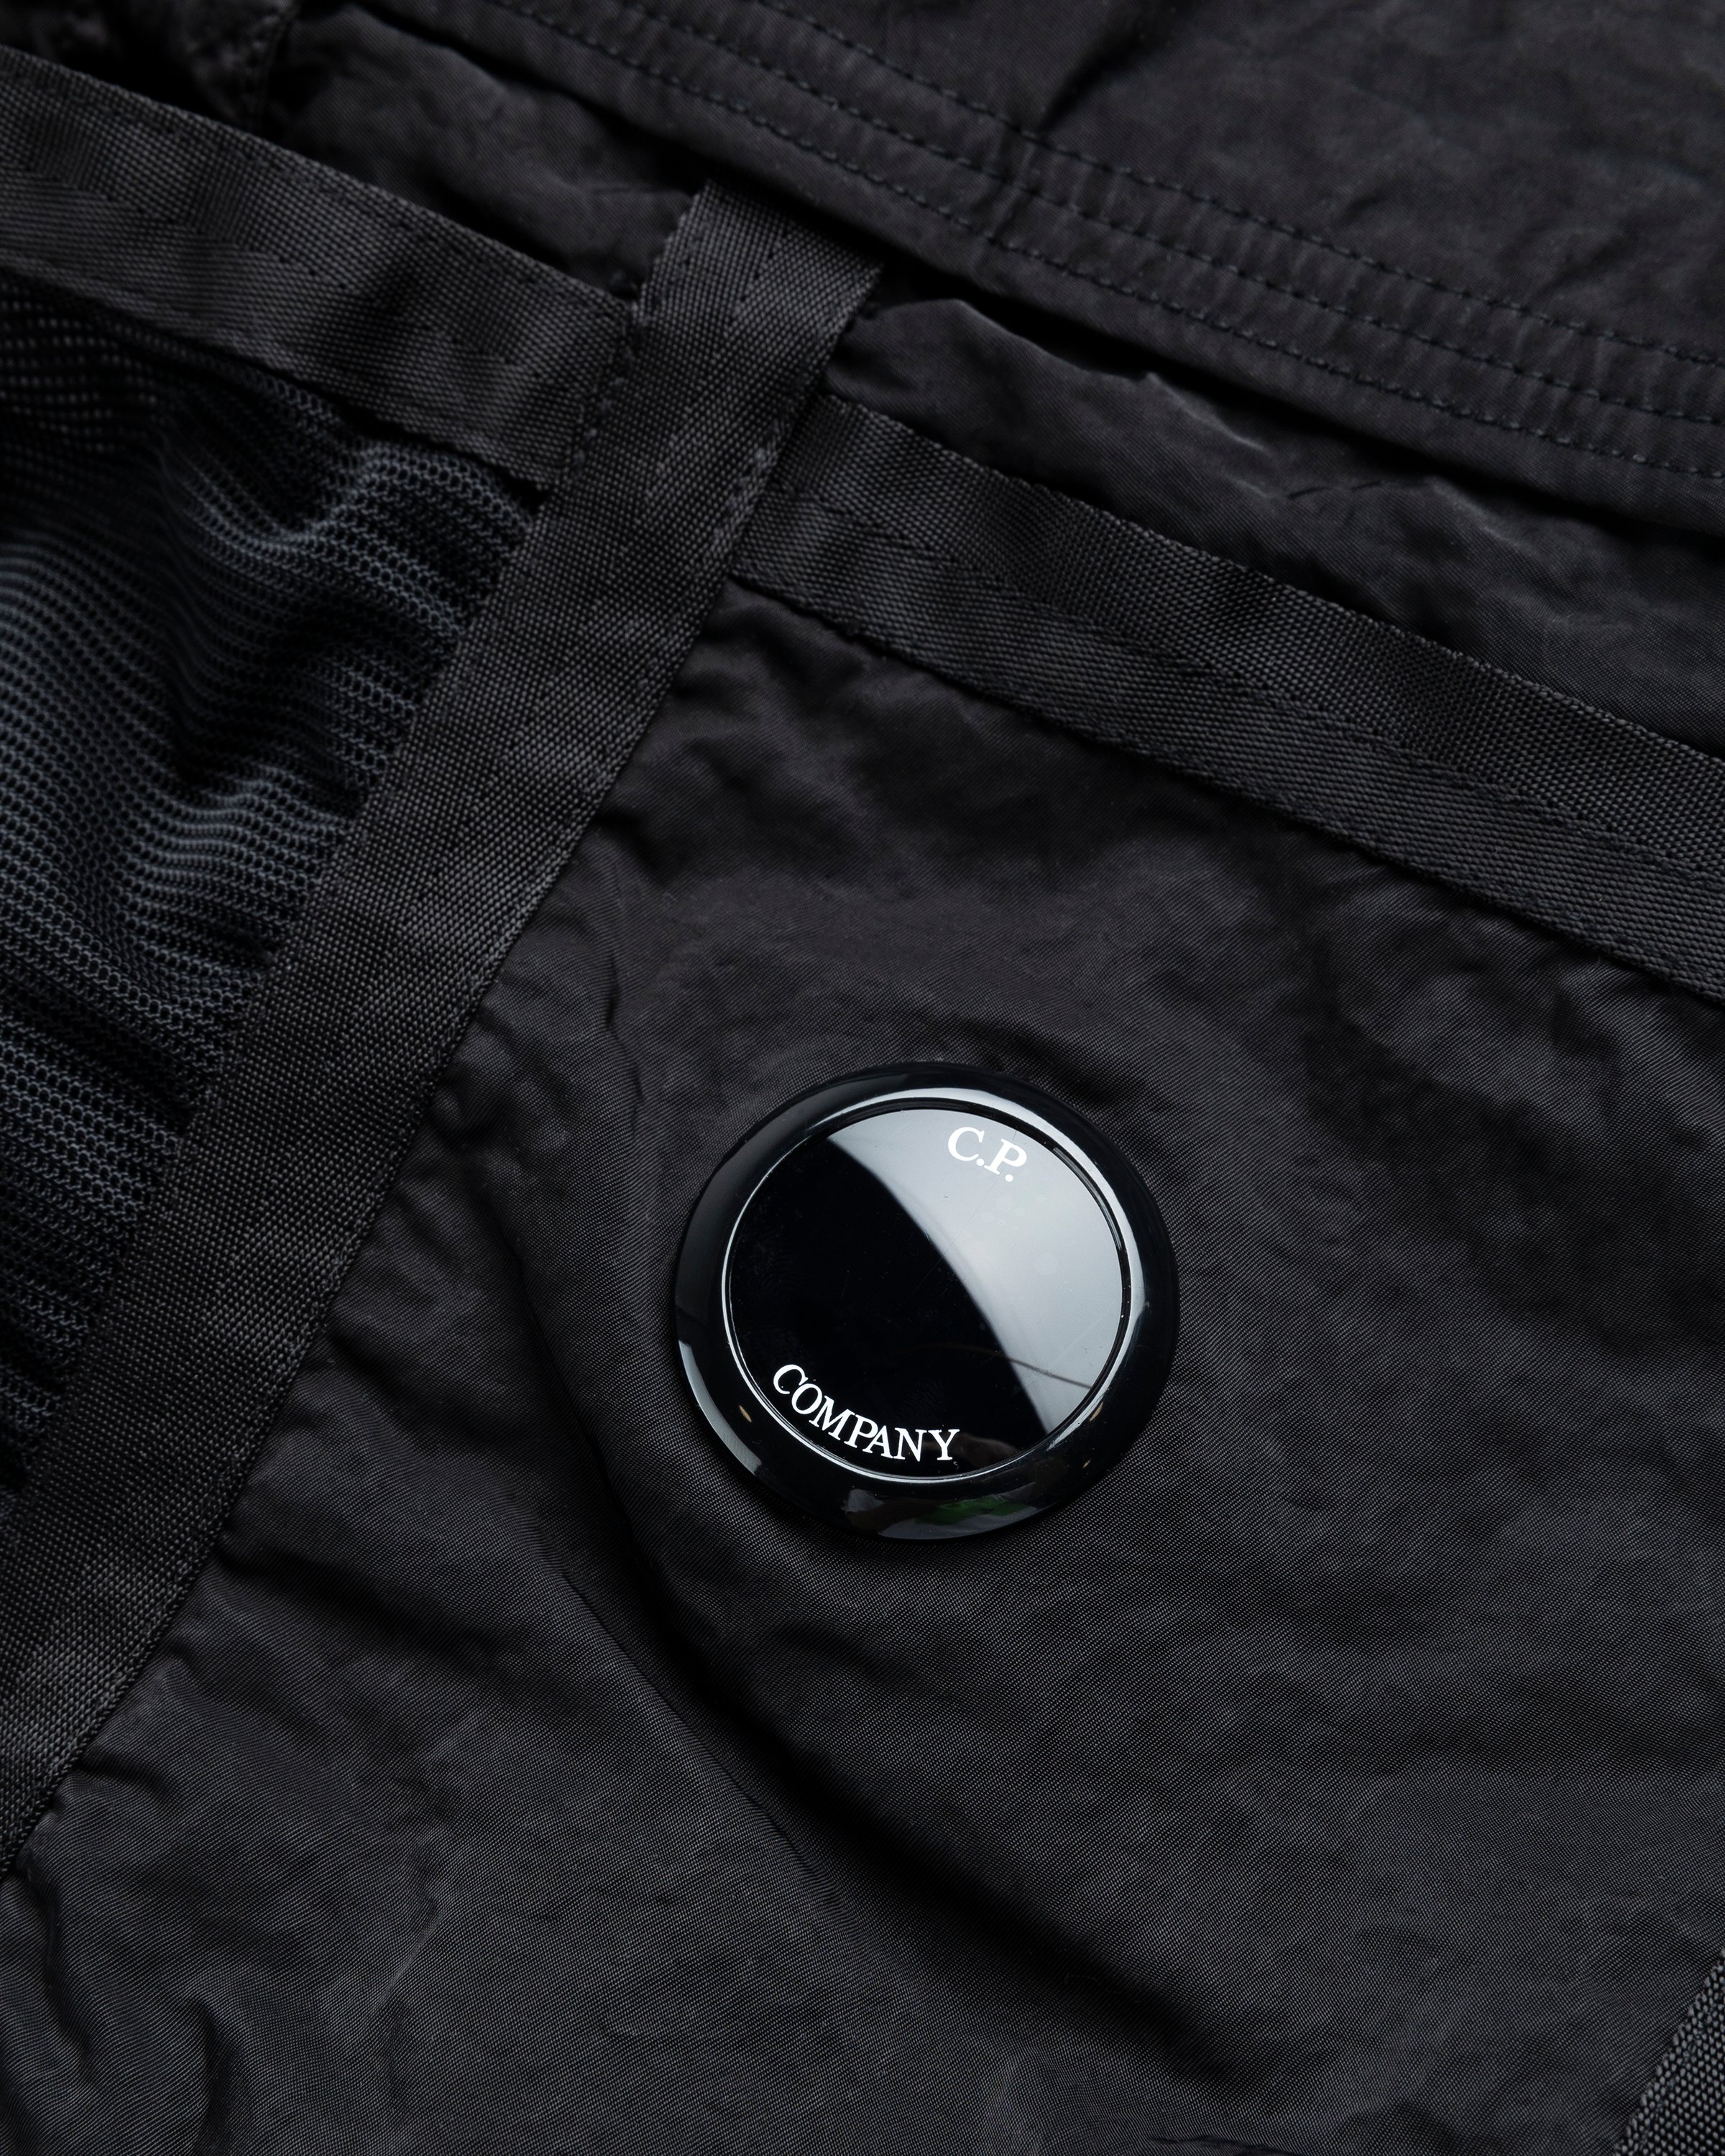 C.P. Company - Nylon B Messenger Bag Black - Accessories - Black - Image 5